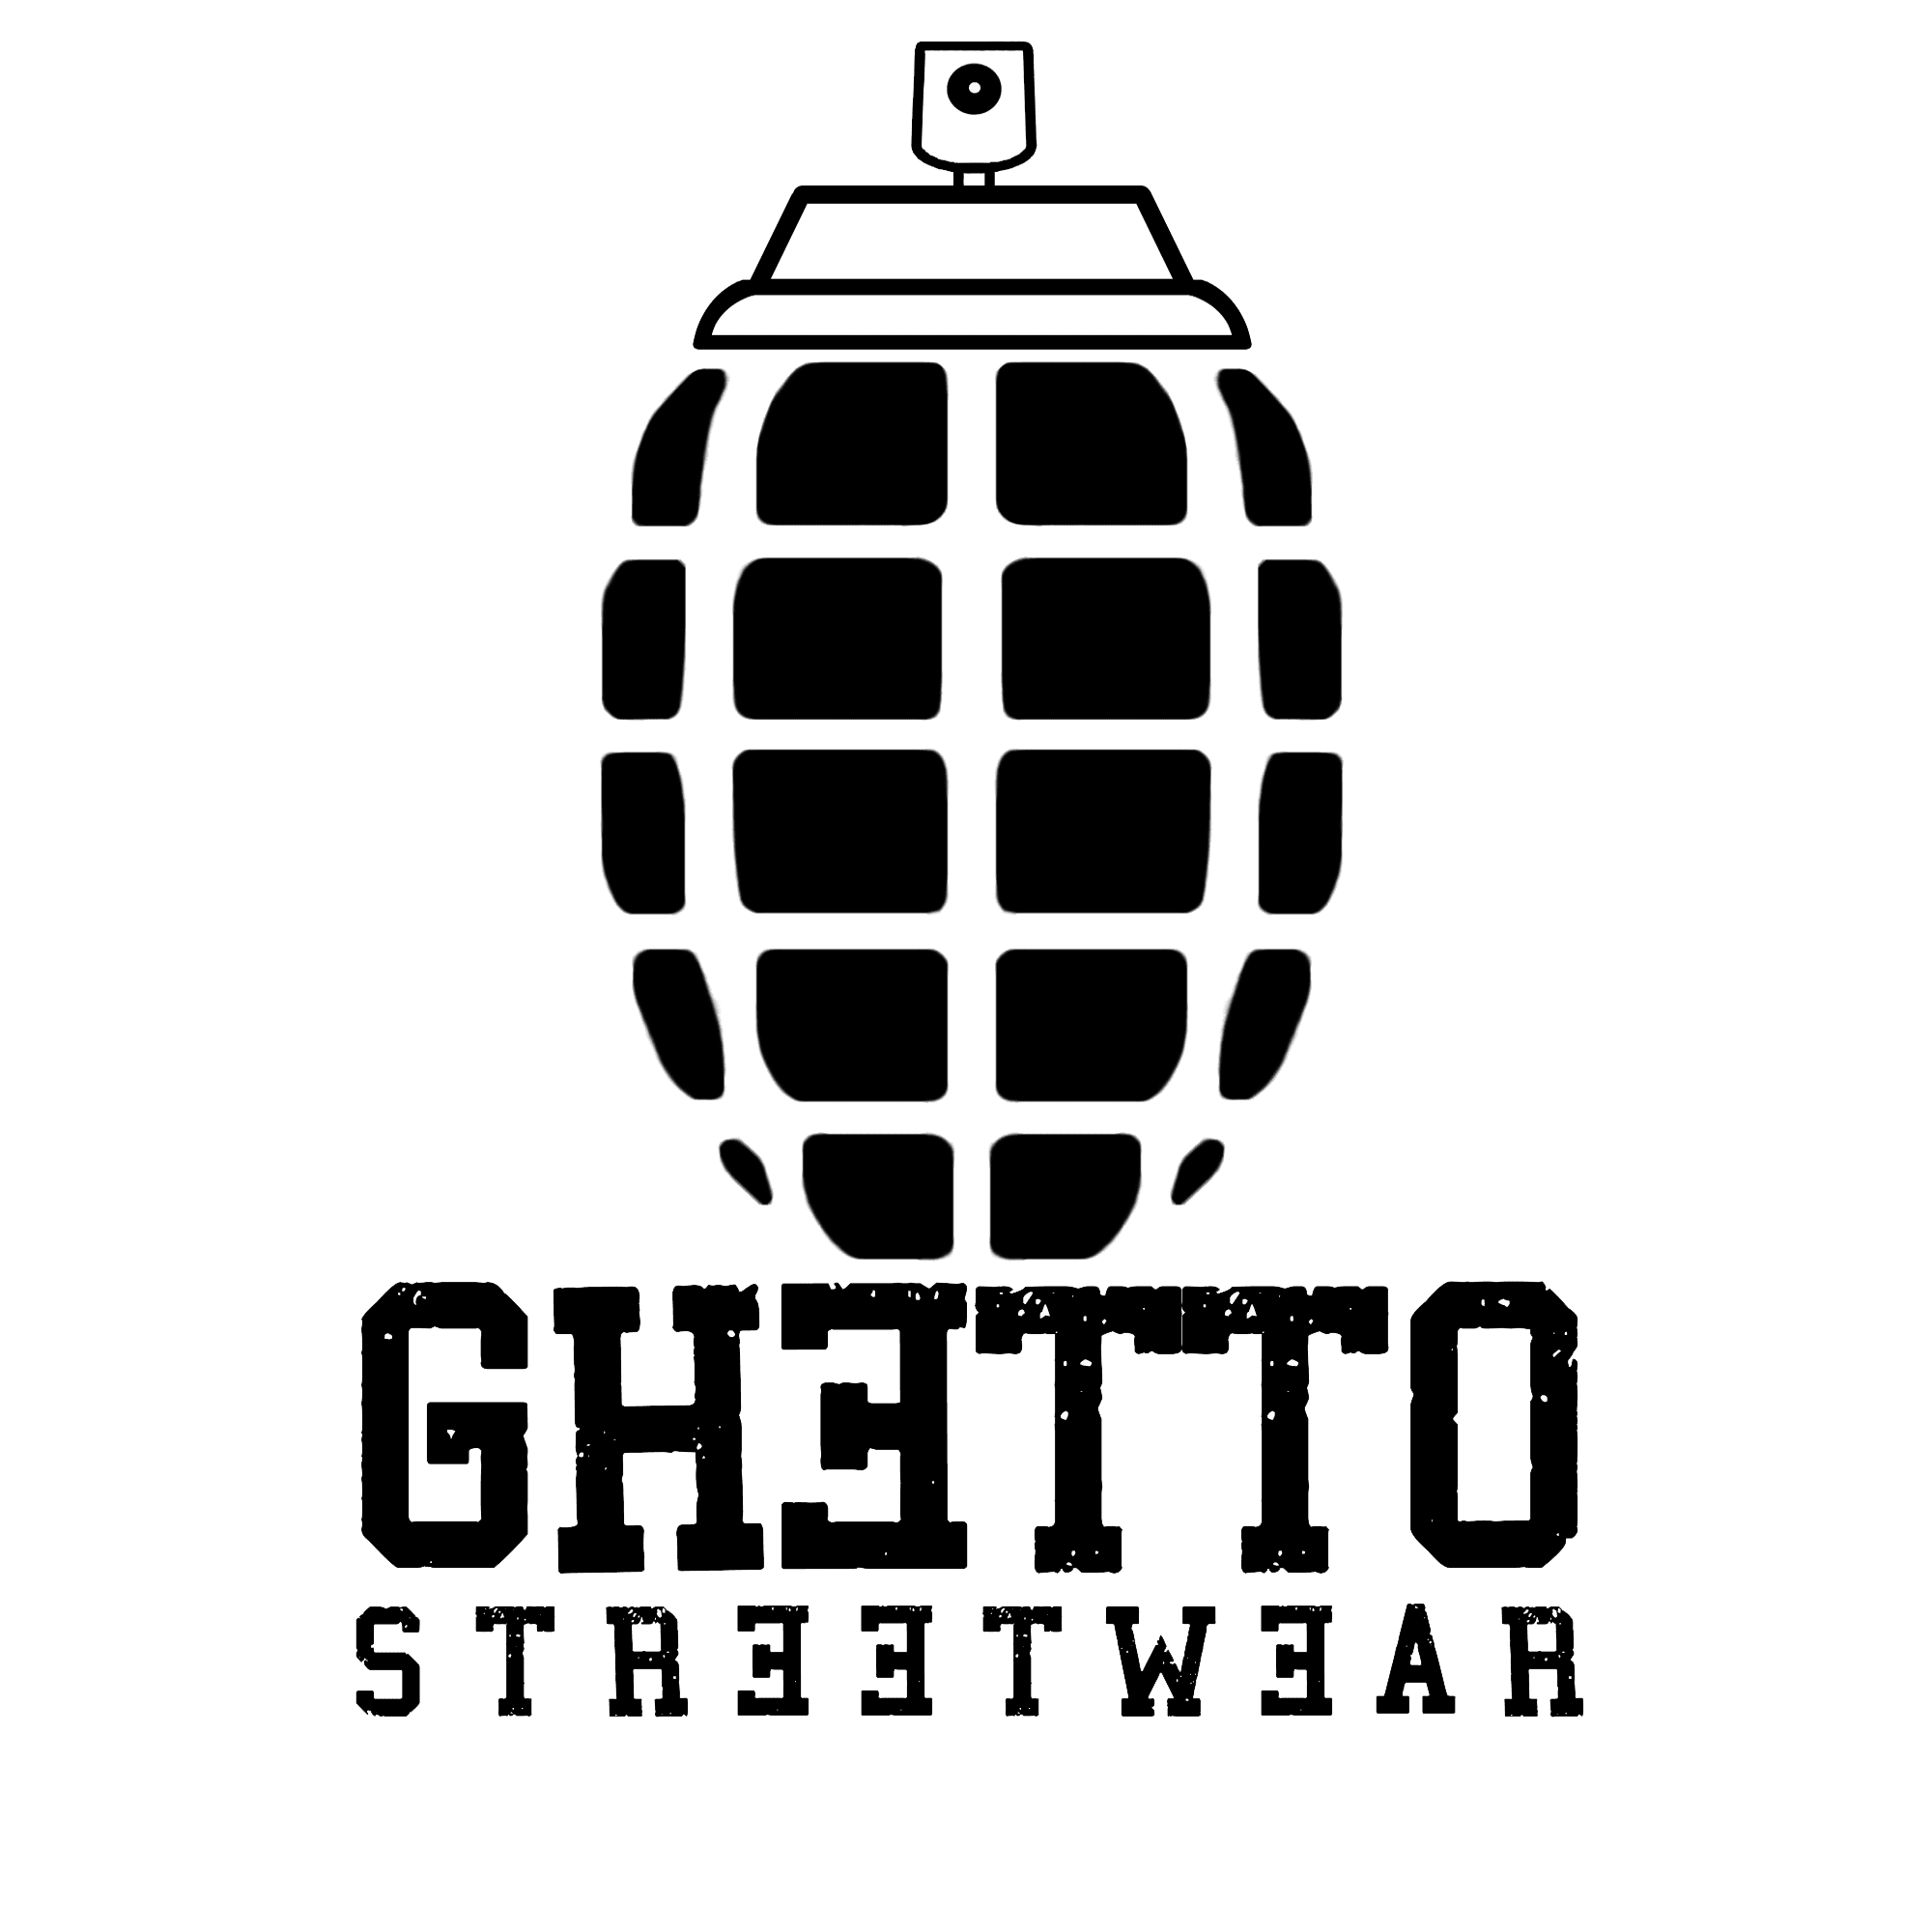 Ghetto Streetwear